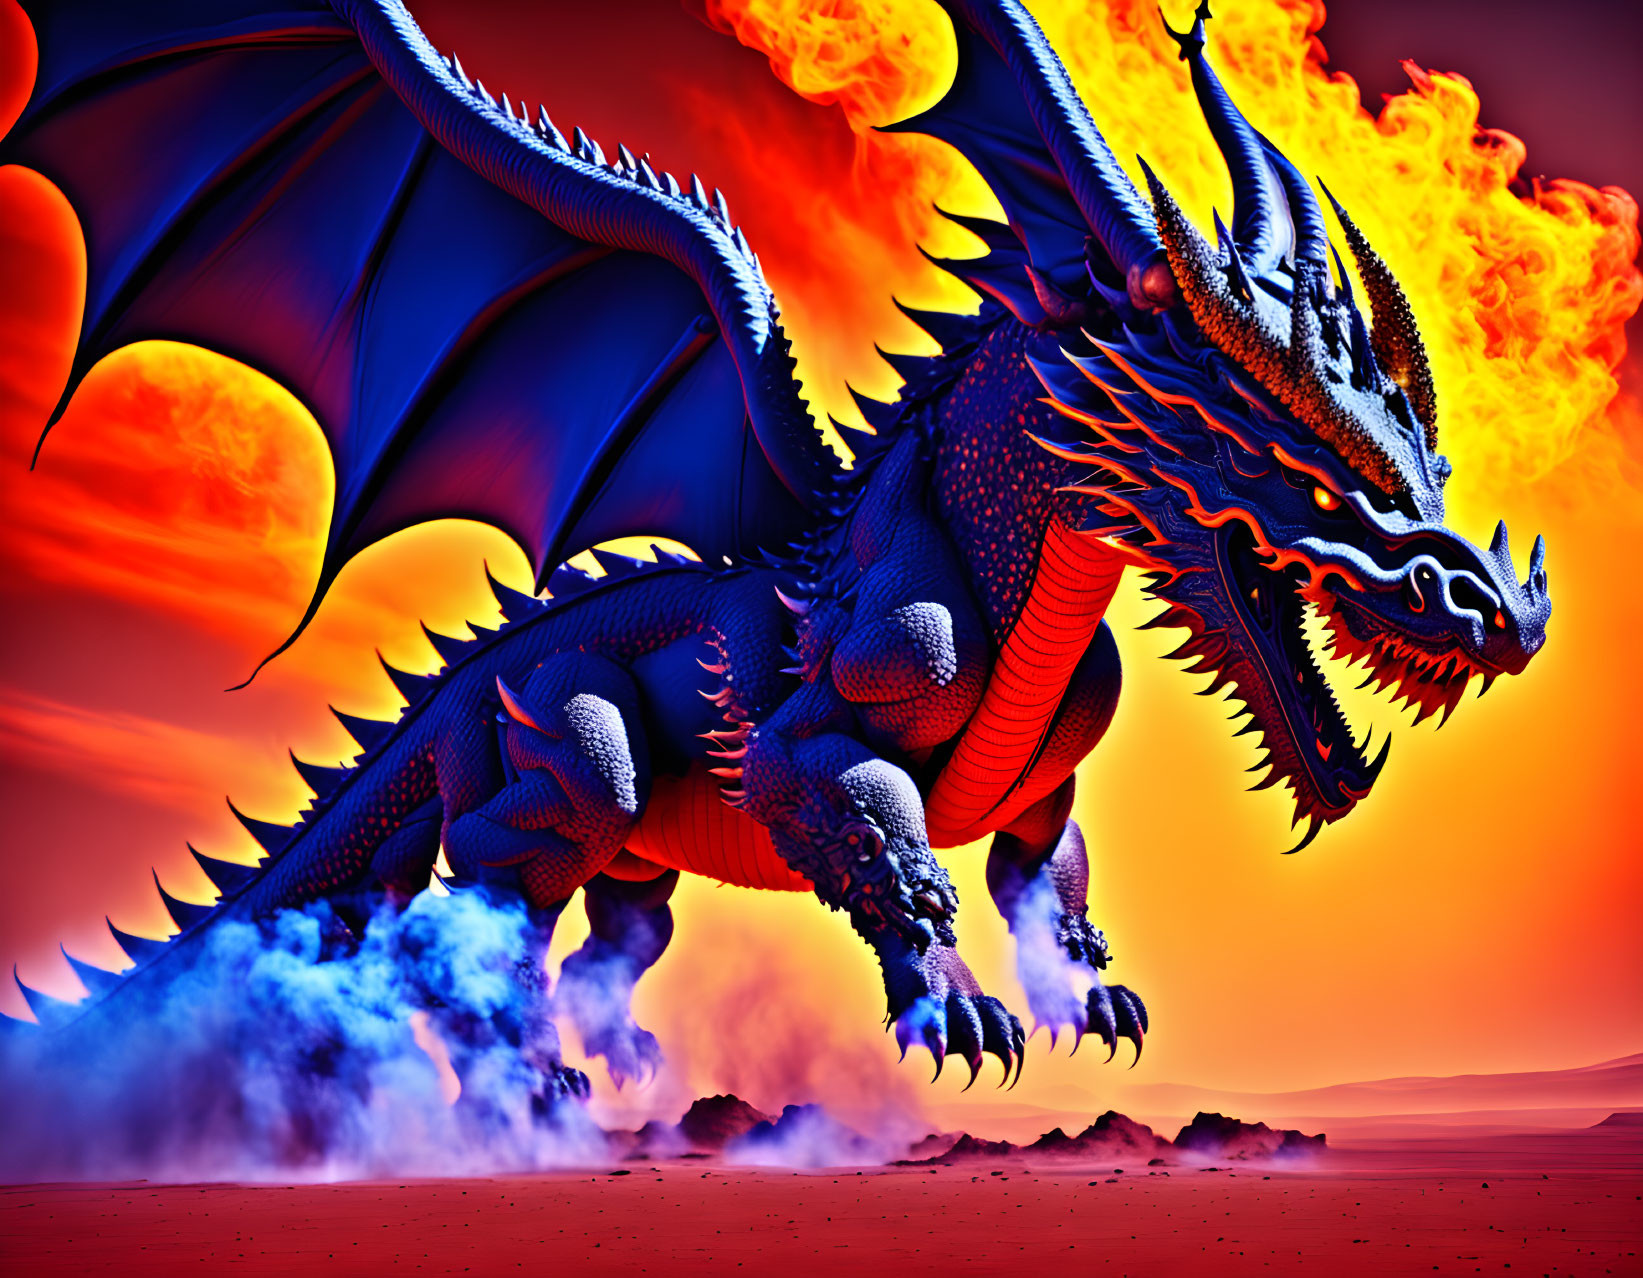 Colorful Dragon Breathing Fire in Digital Art